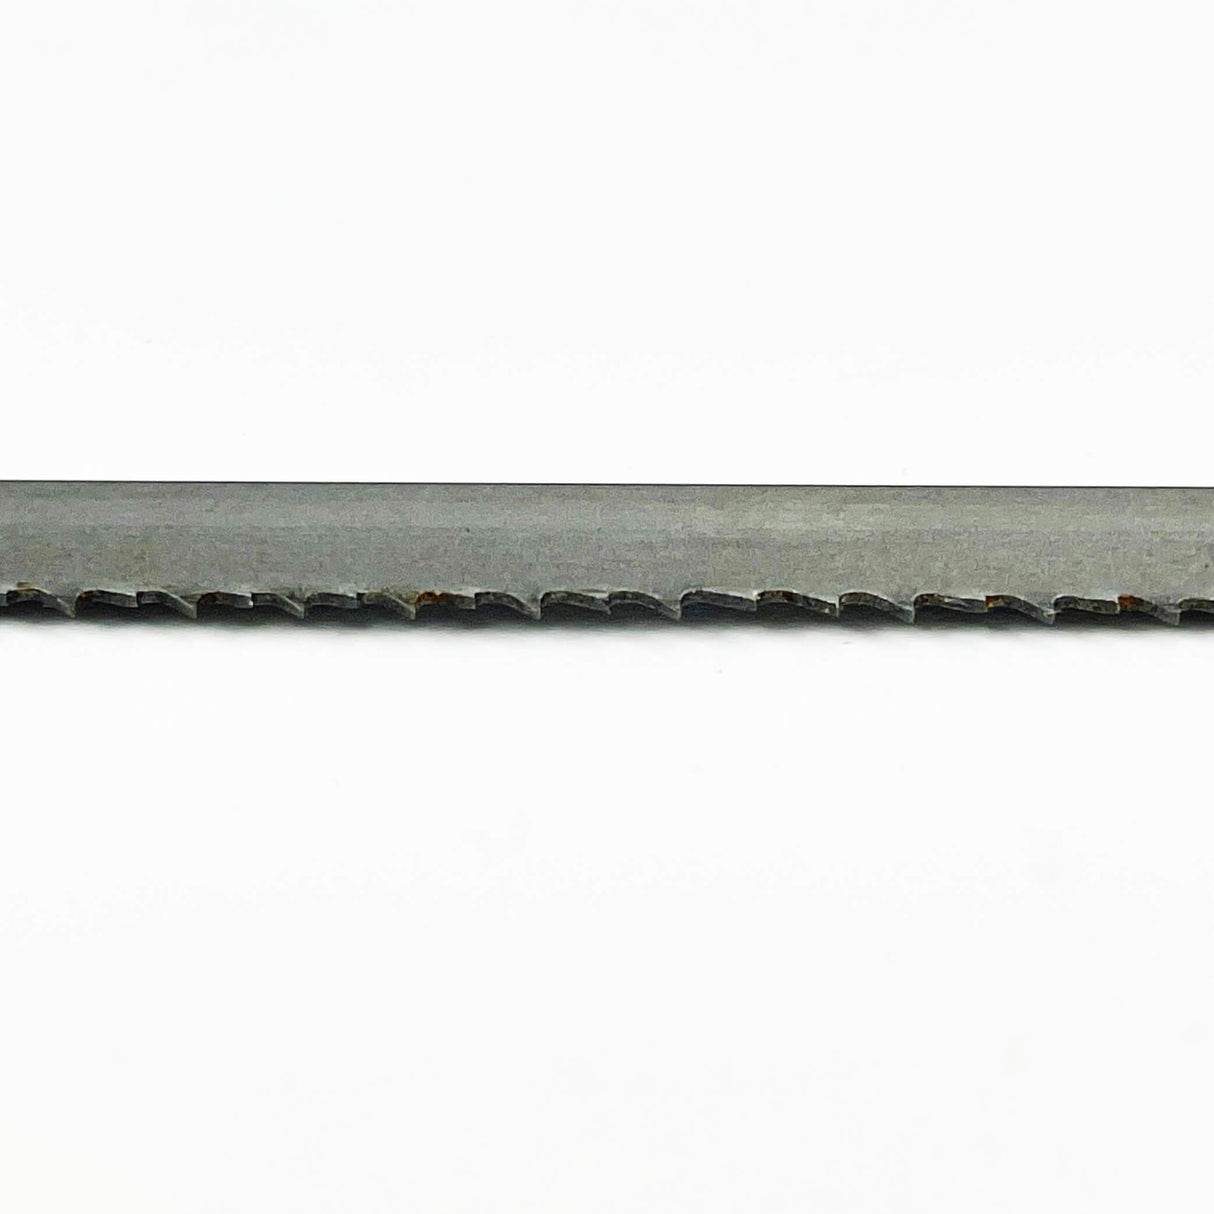 4575mm Long x 13mm Wide COBALT M42 Bi-Metal Band Saw - Pack of 2 Blades